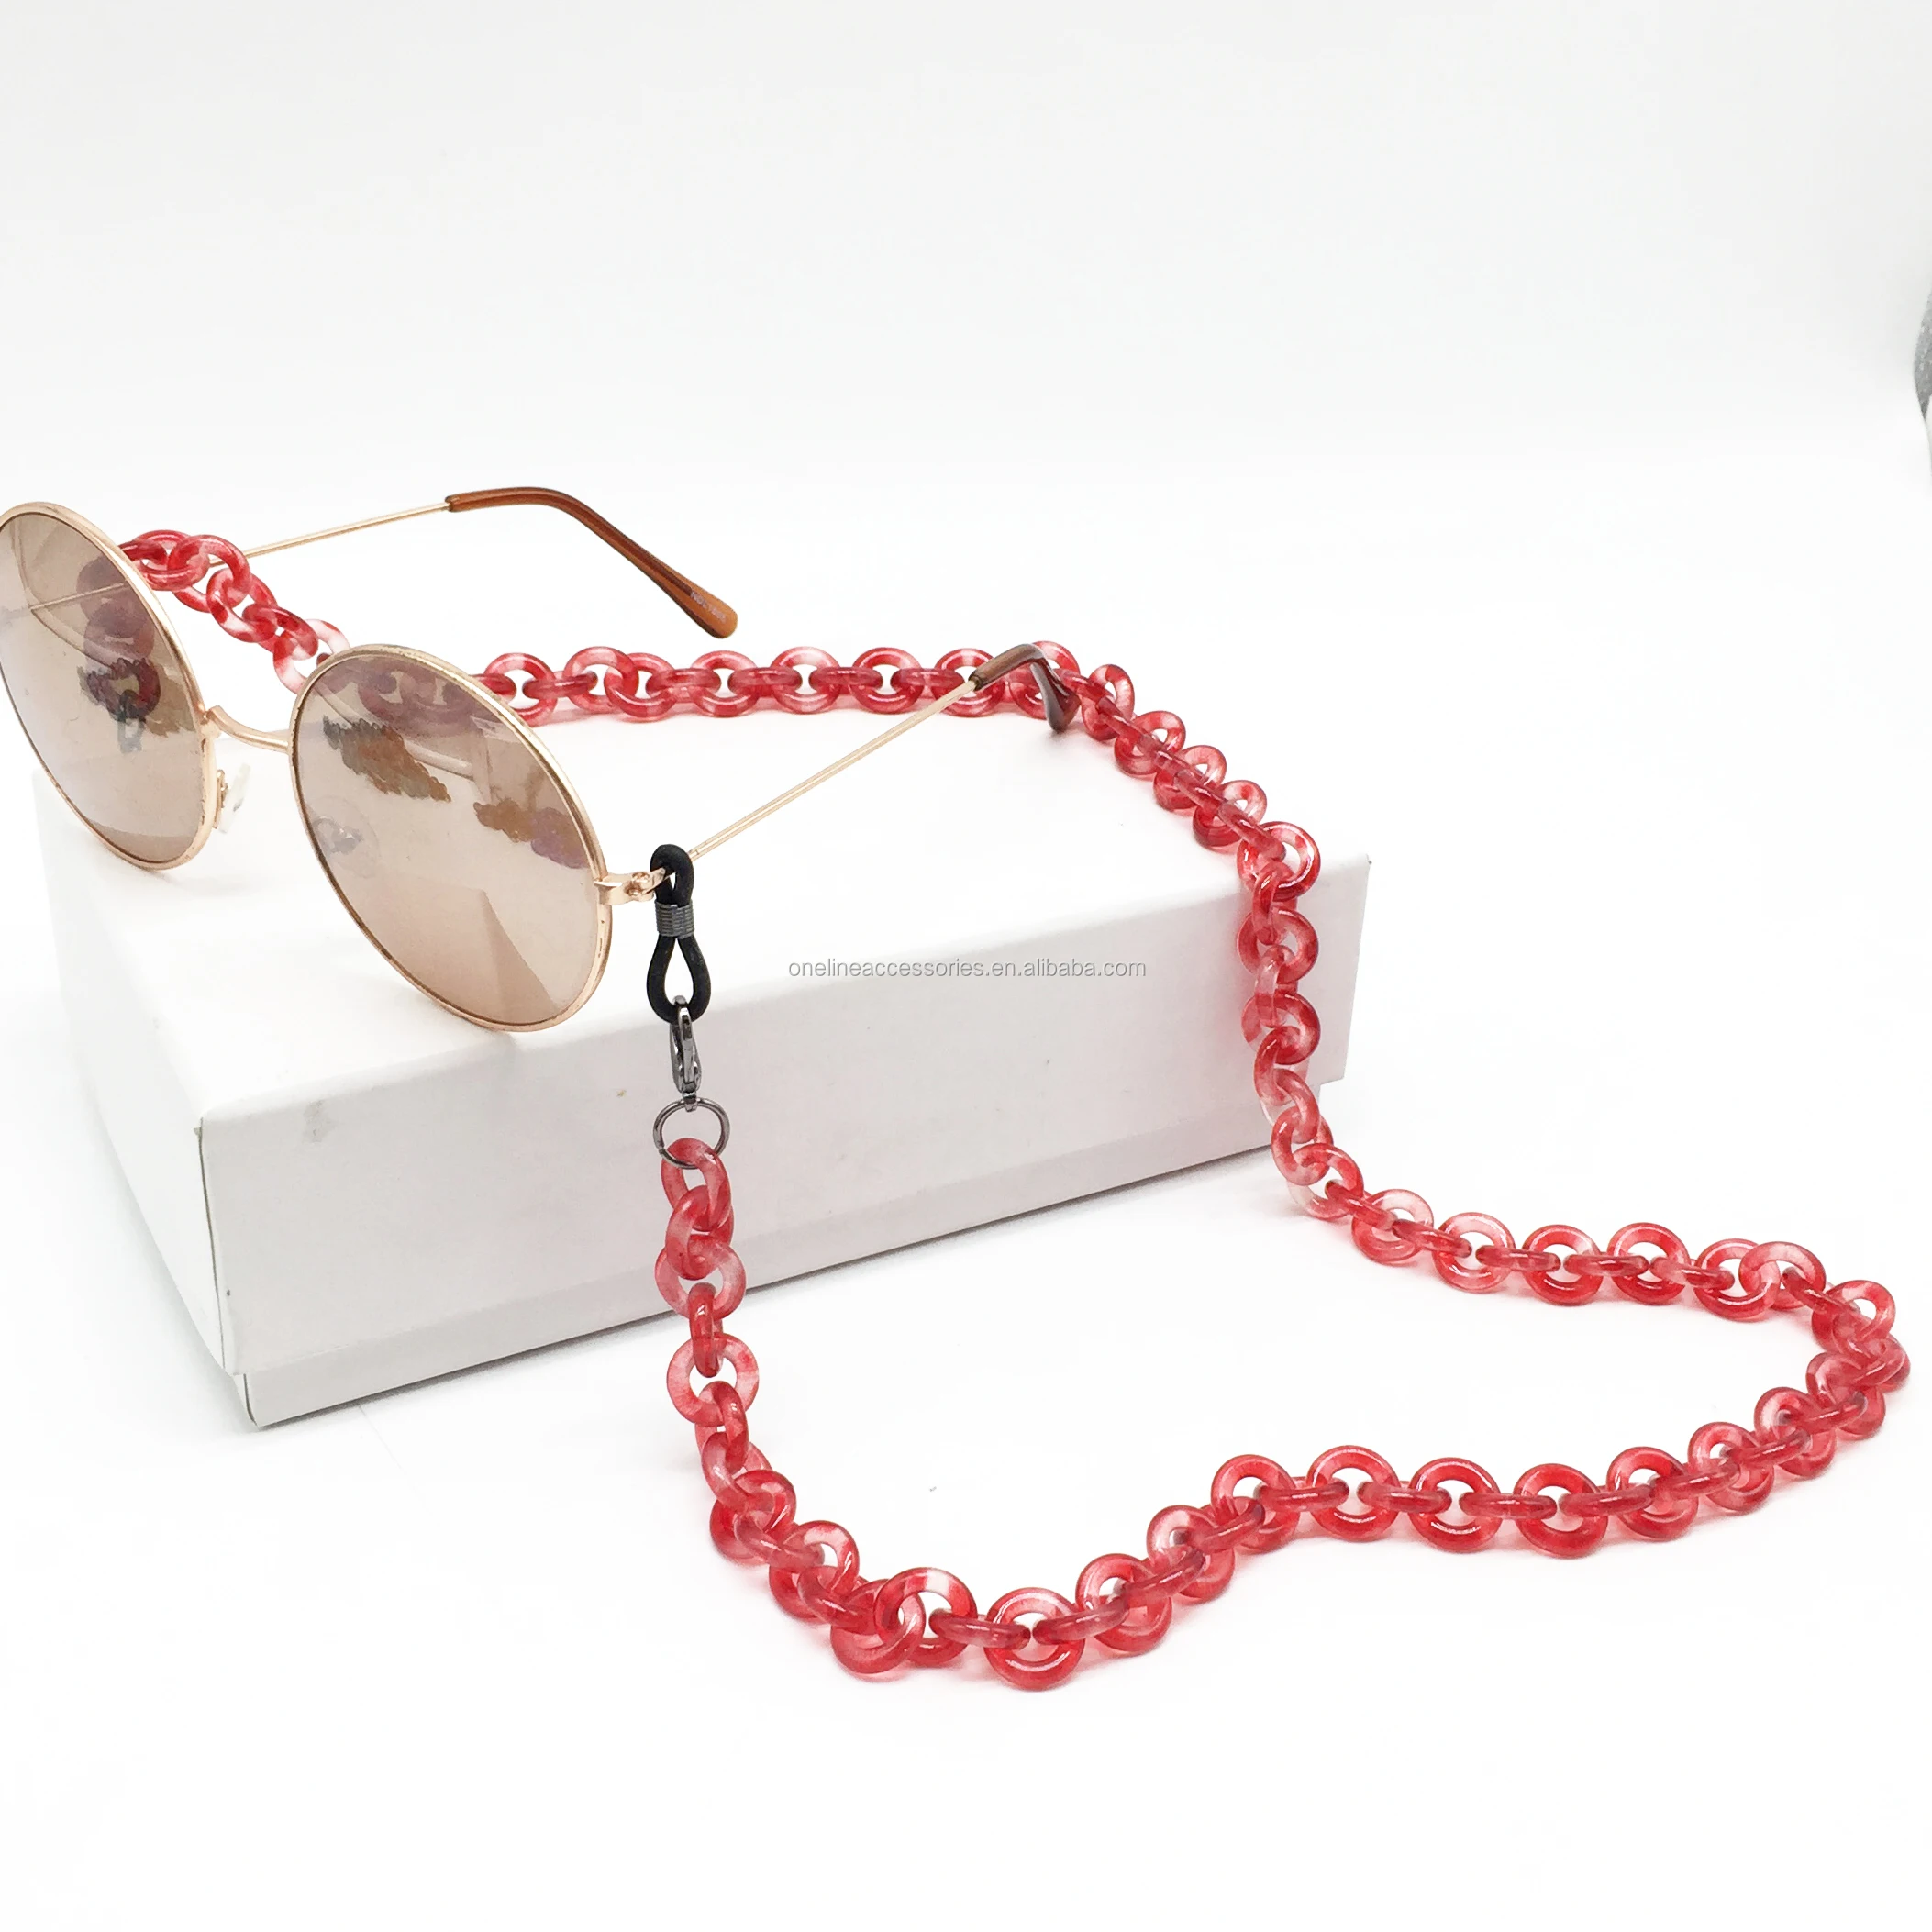 The New Season Chanel Glasses: Chain Collection – Fashion Eyewear US